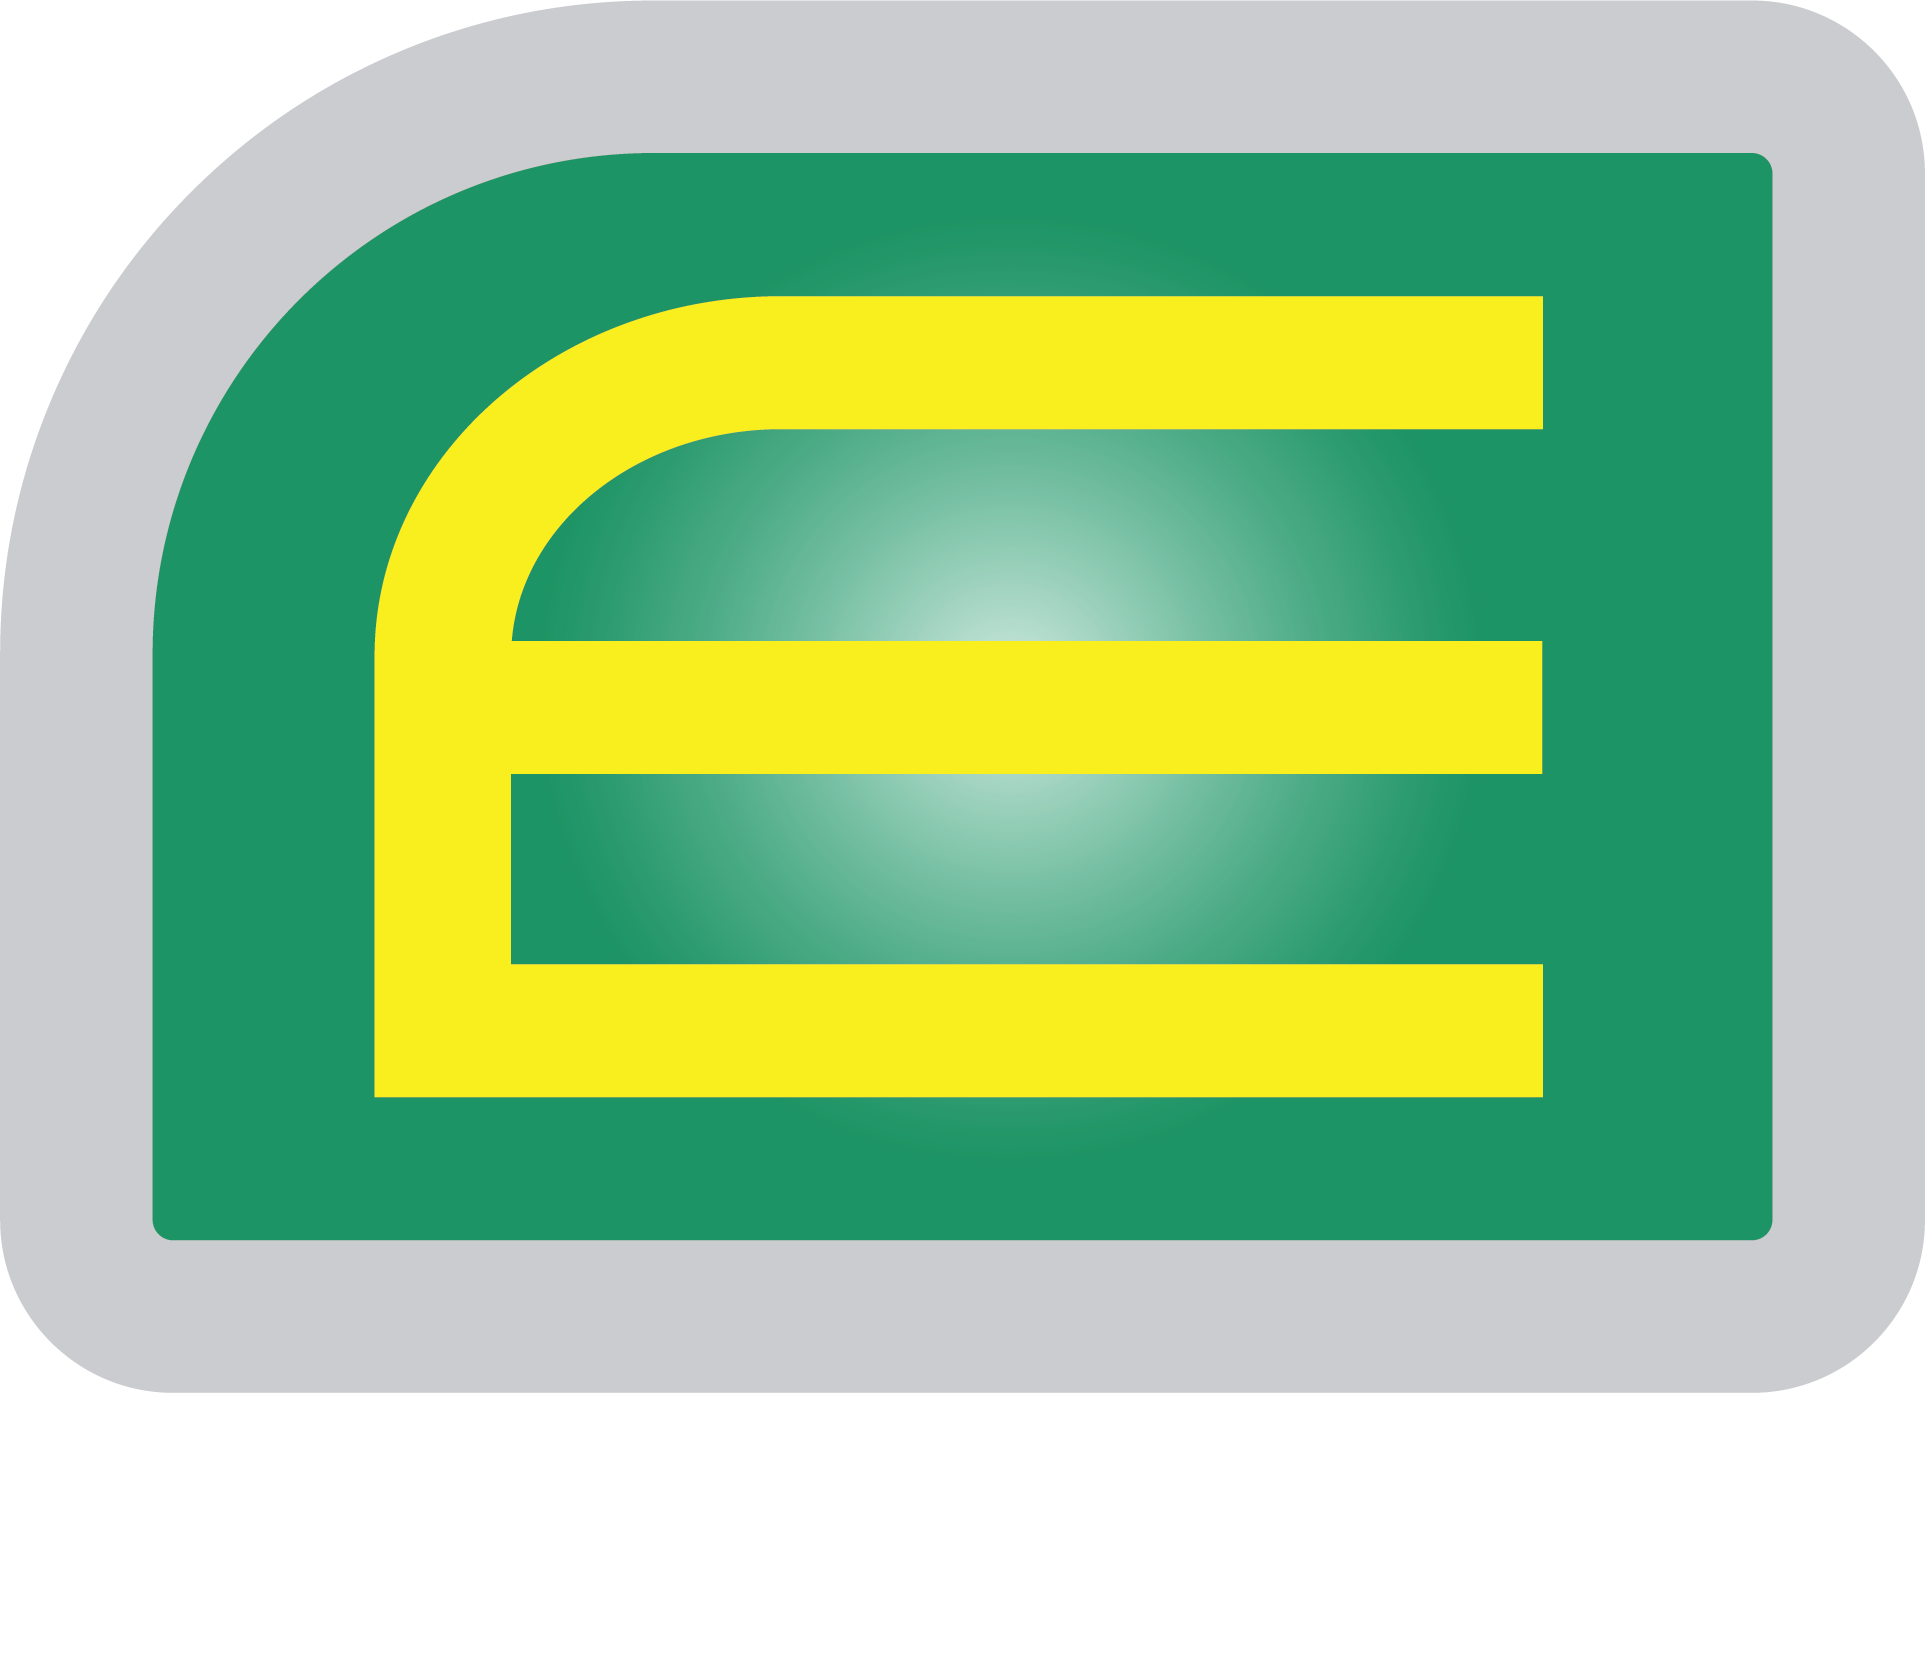 ETAL